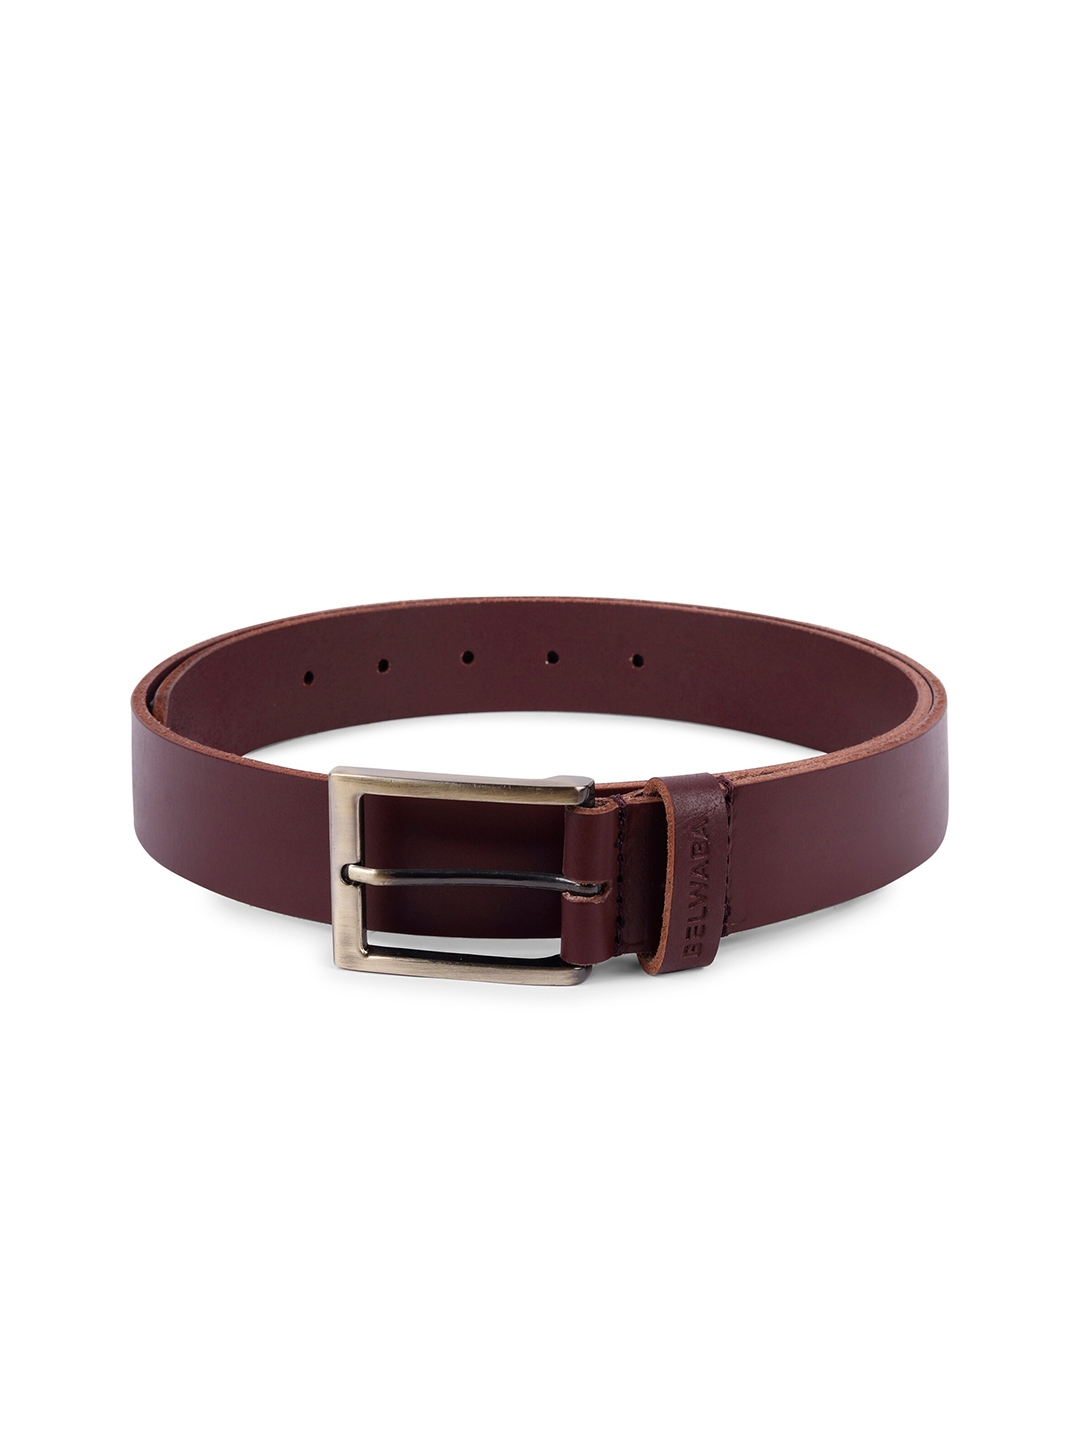 Buy Belwaba Men Burgundy Leather Belt - Belts for Men 17682264 | Myntra